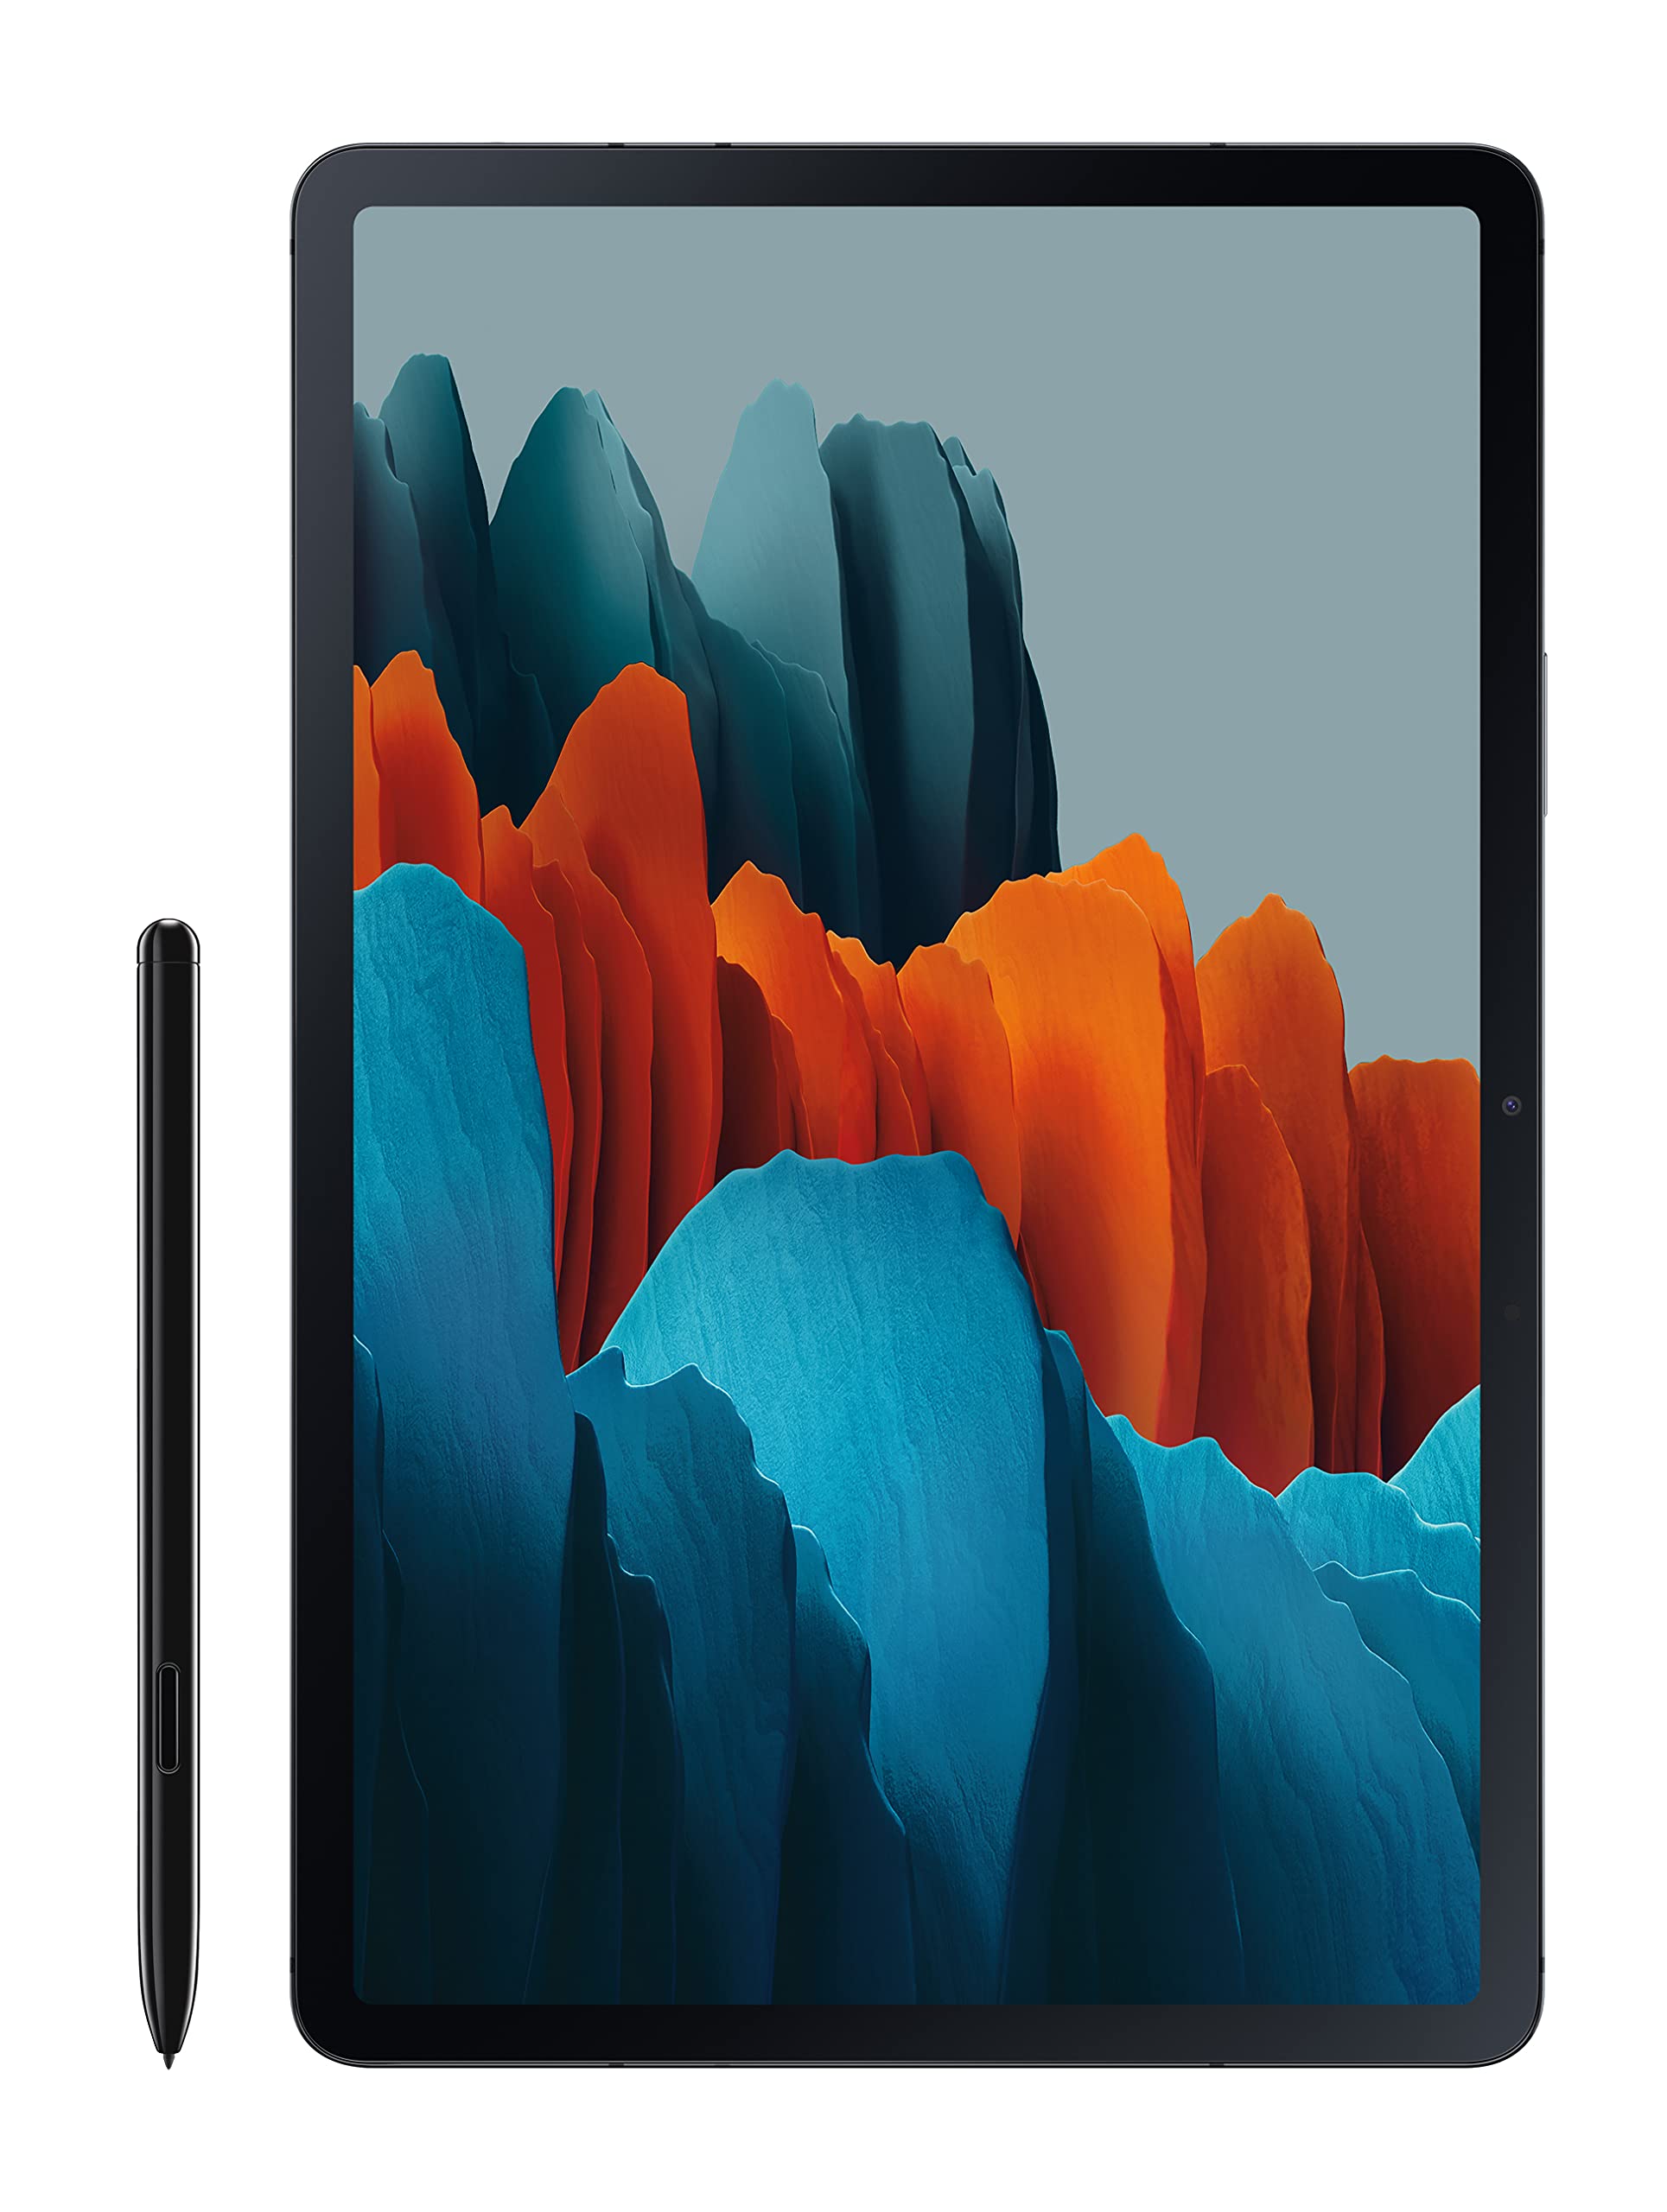 Samsung Galaxy Tab S7 Wi-Fi, Mystic Black - 512GB